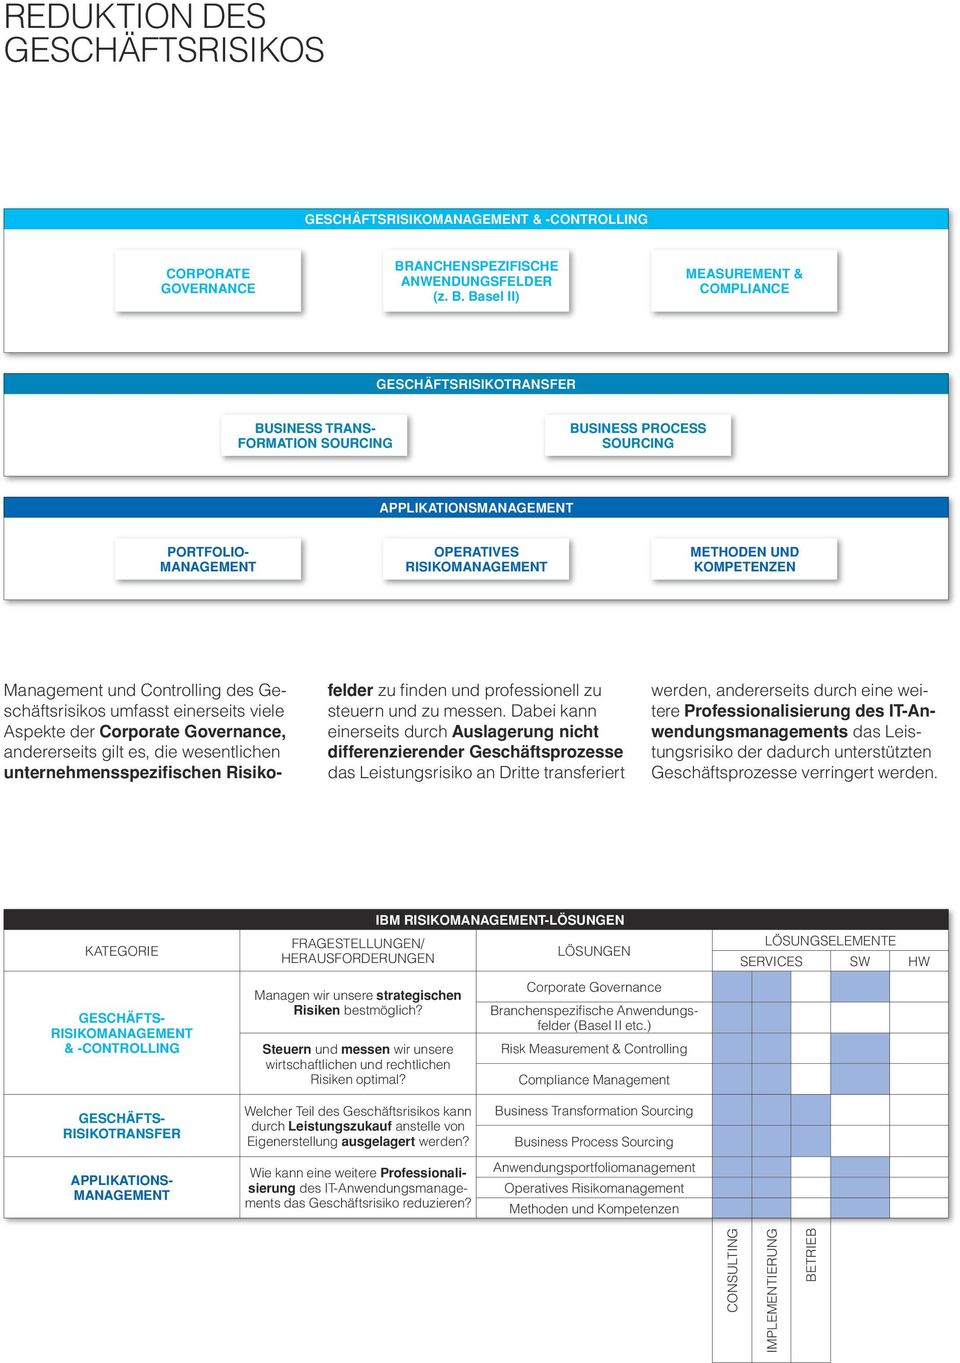 Basel II) Measurement & Compliance Geschäftsrisikotransfer Business Transformation Sourcing Business Process Sourcing Applikationsmanagement Portfolio- Operatives Risikomanagement Methoden und